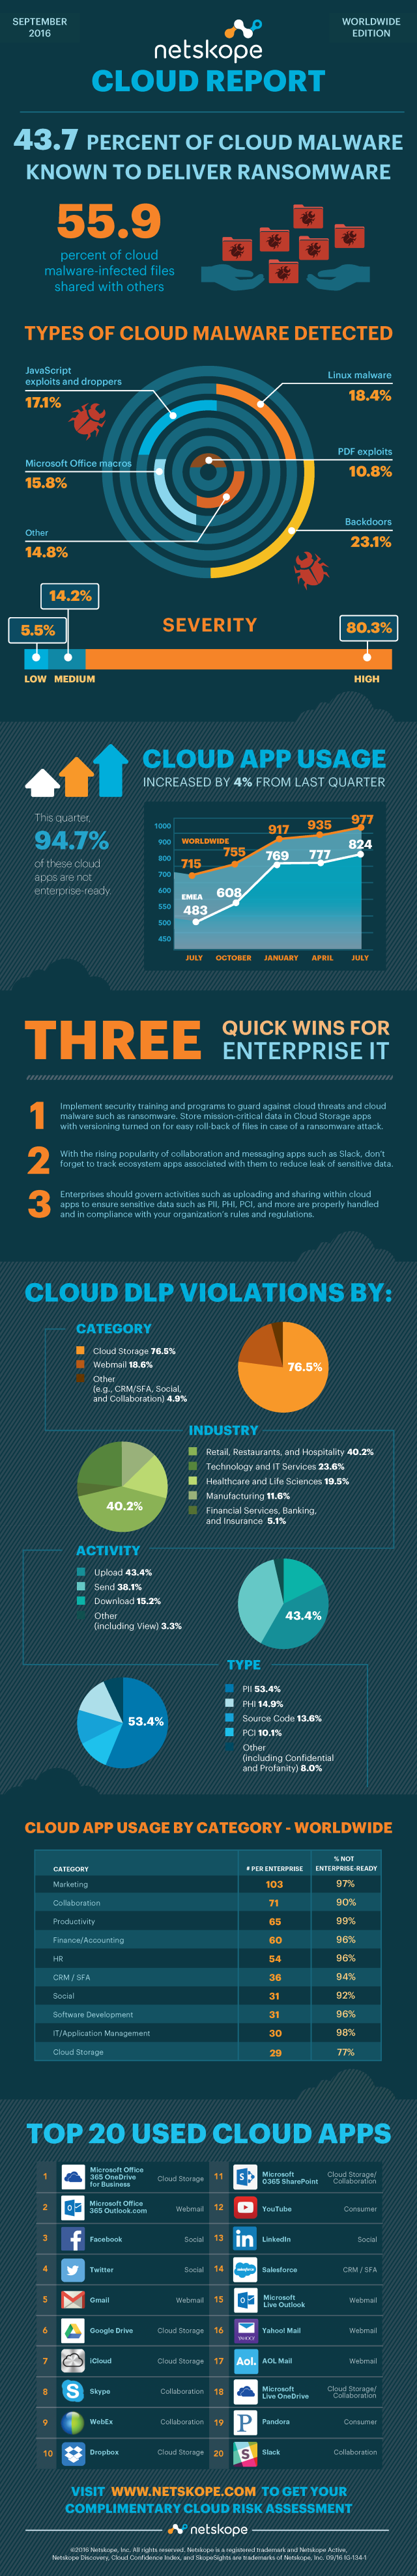 Netskope cloud infographic